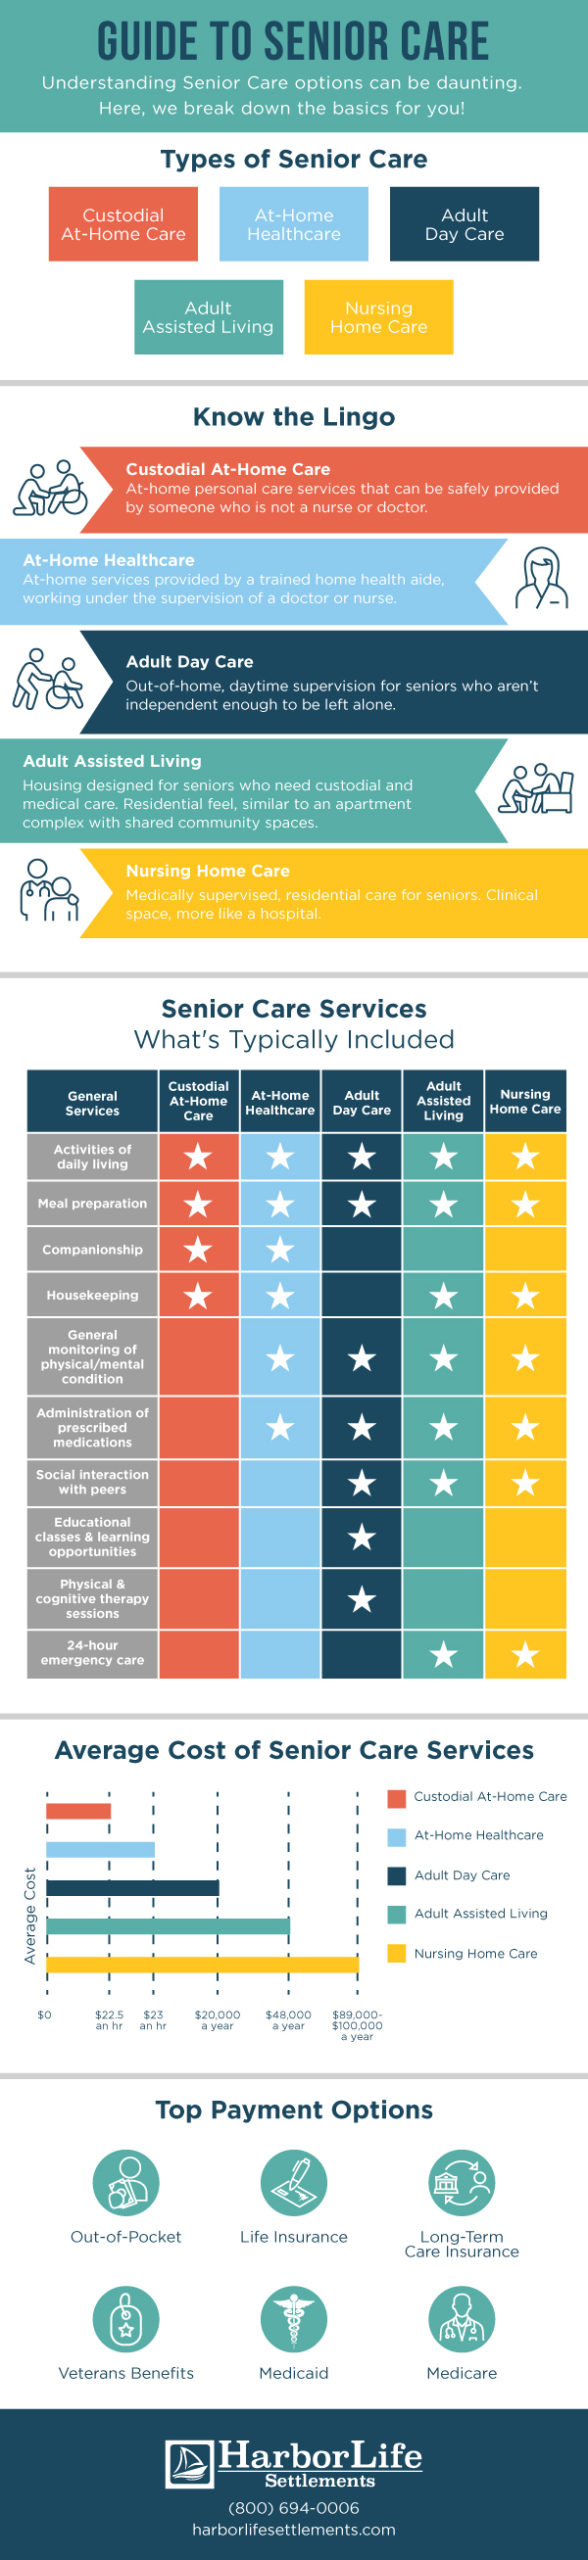 senior care guide infographic